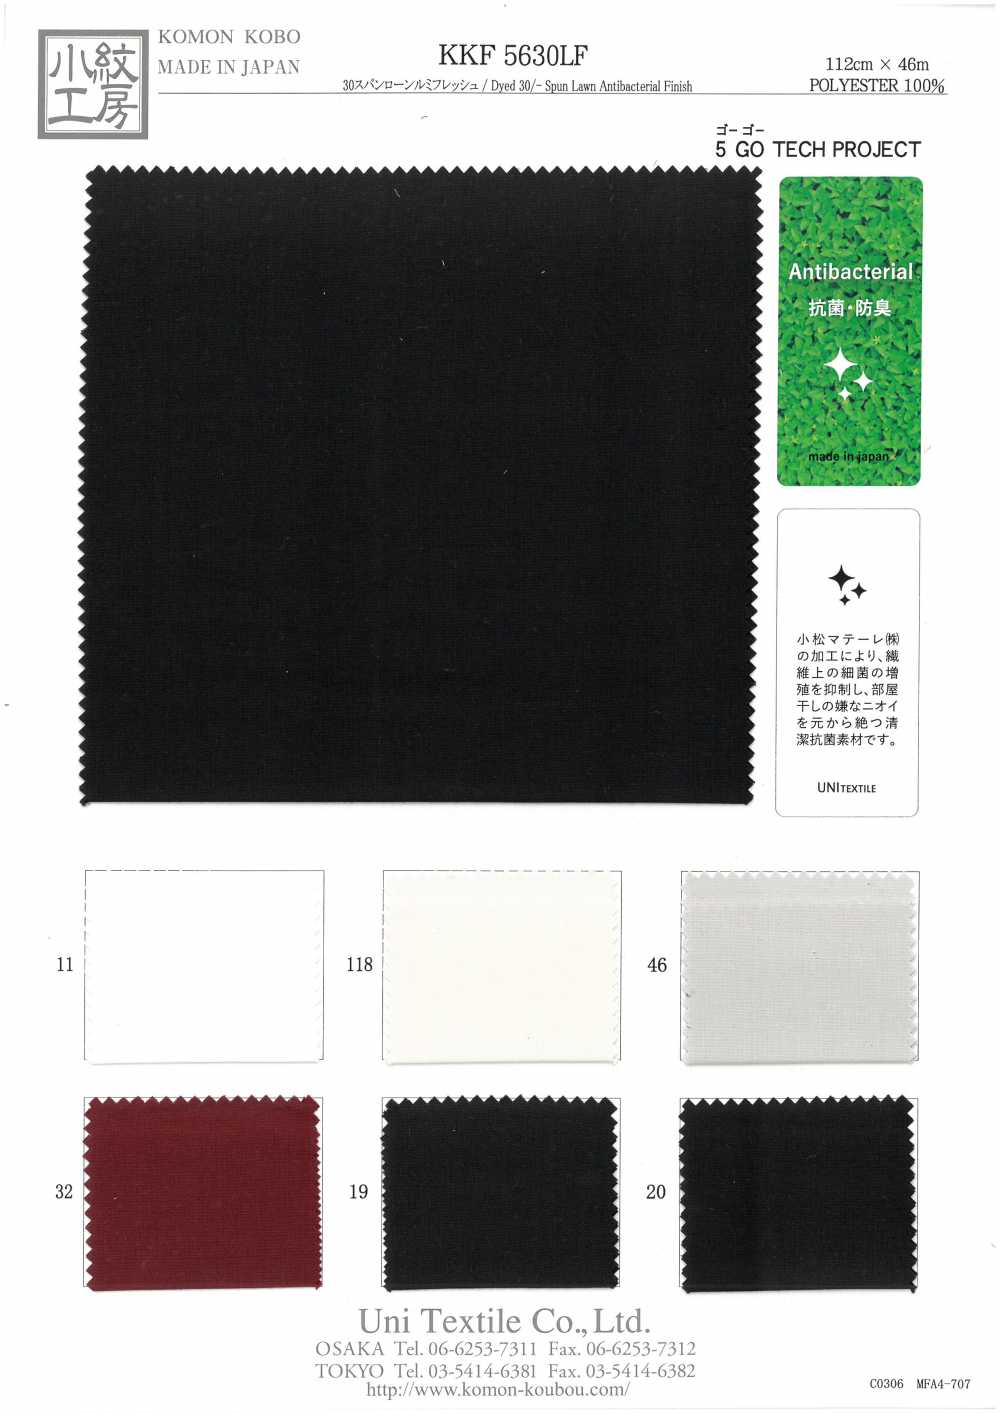 KKF5630LF 30 Spun Lawn Lumi Fresh[Textile / Fabric] Uni Textile